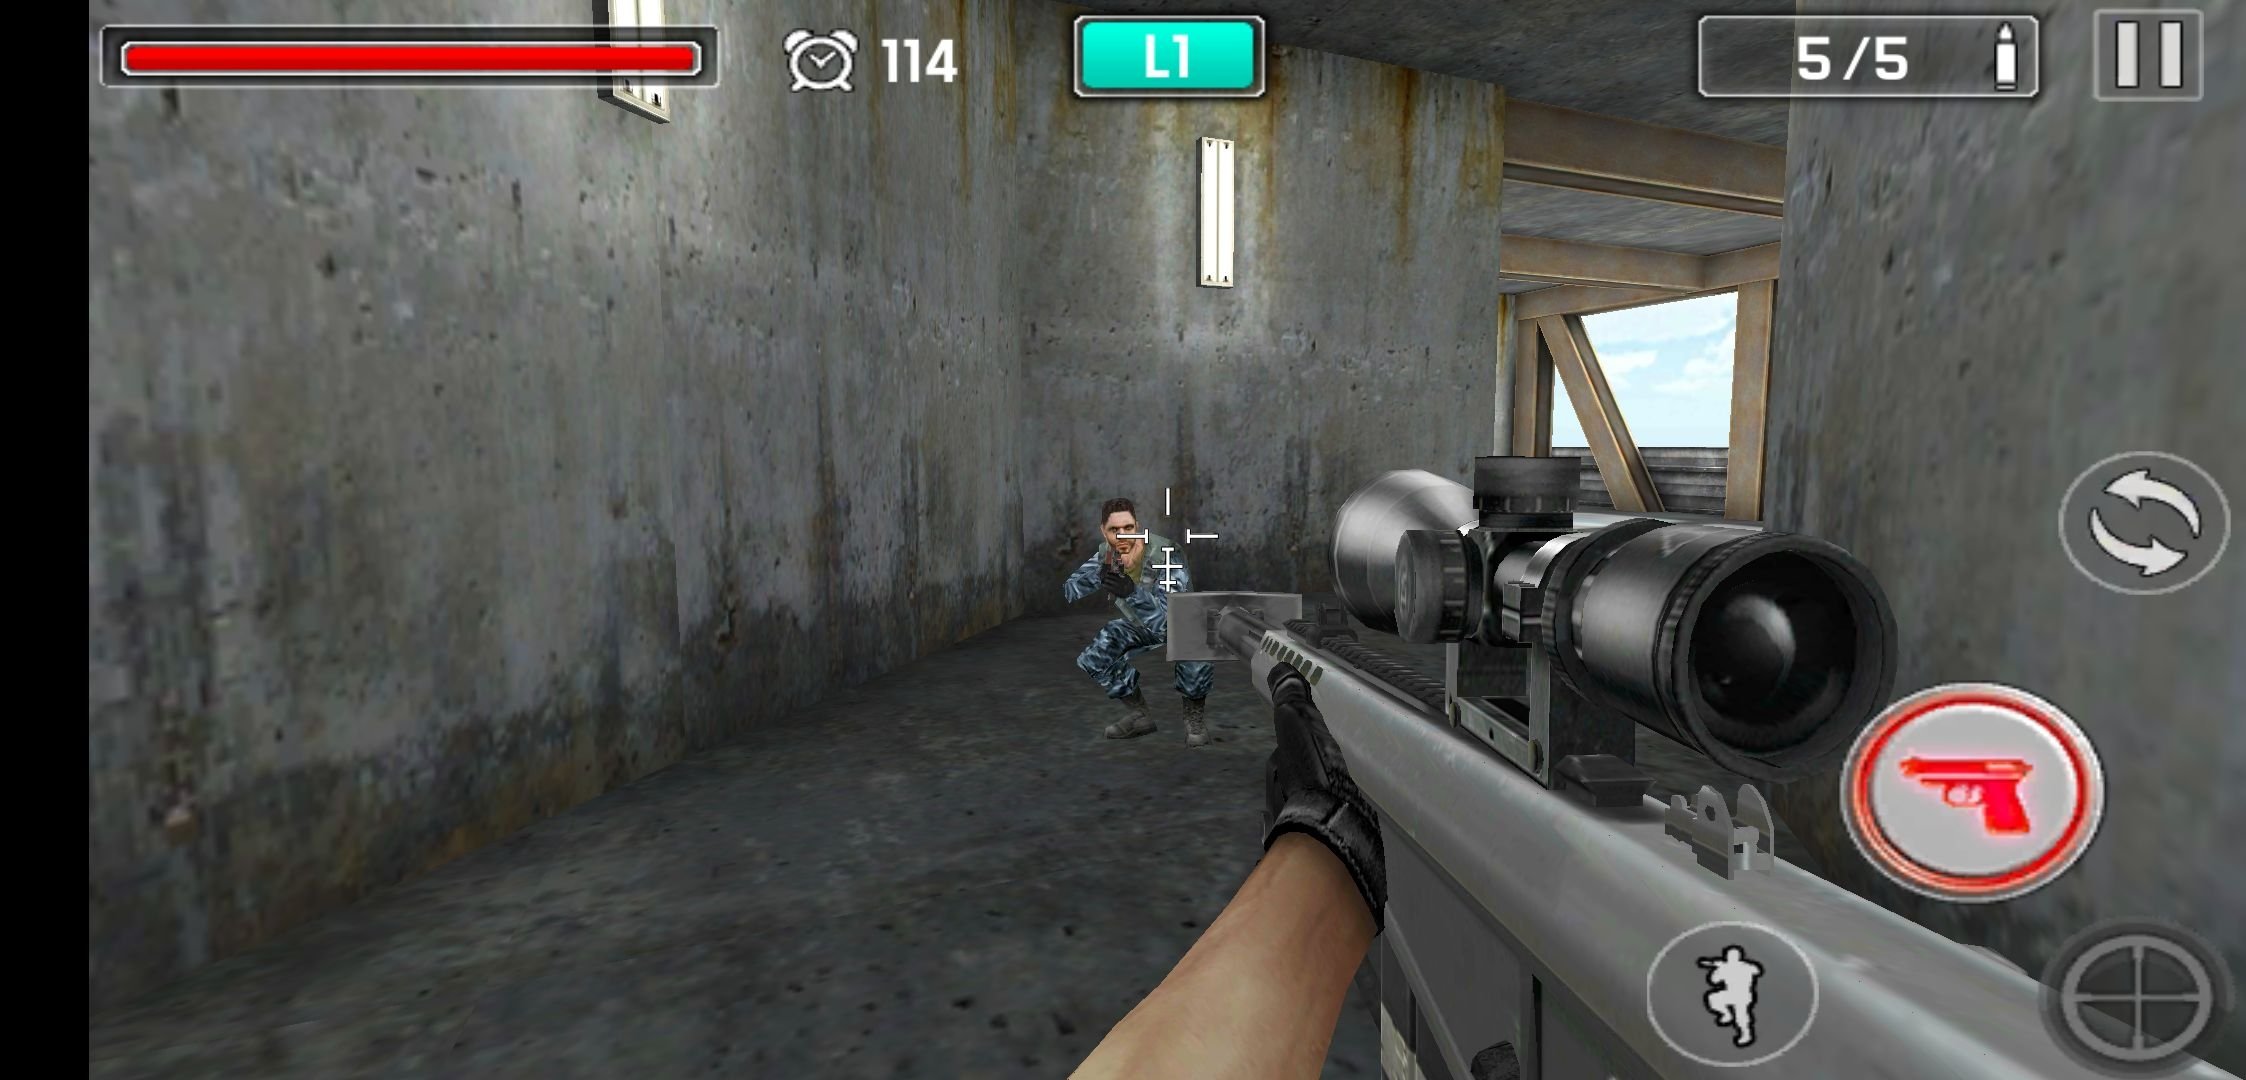 Gun Shoot War Q APK for Android - Download